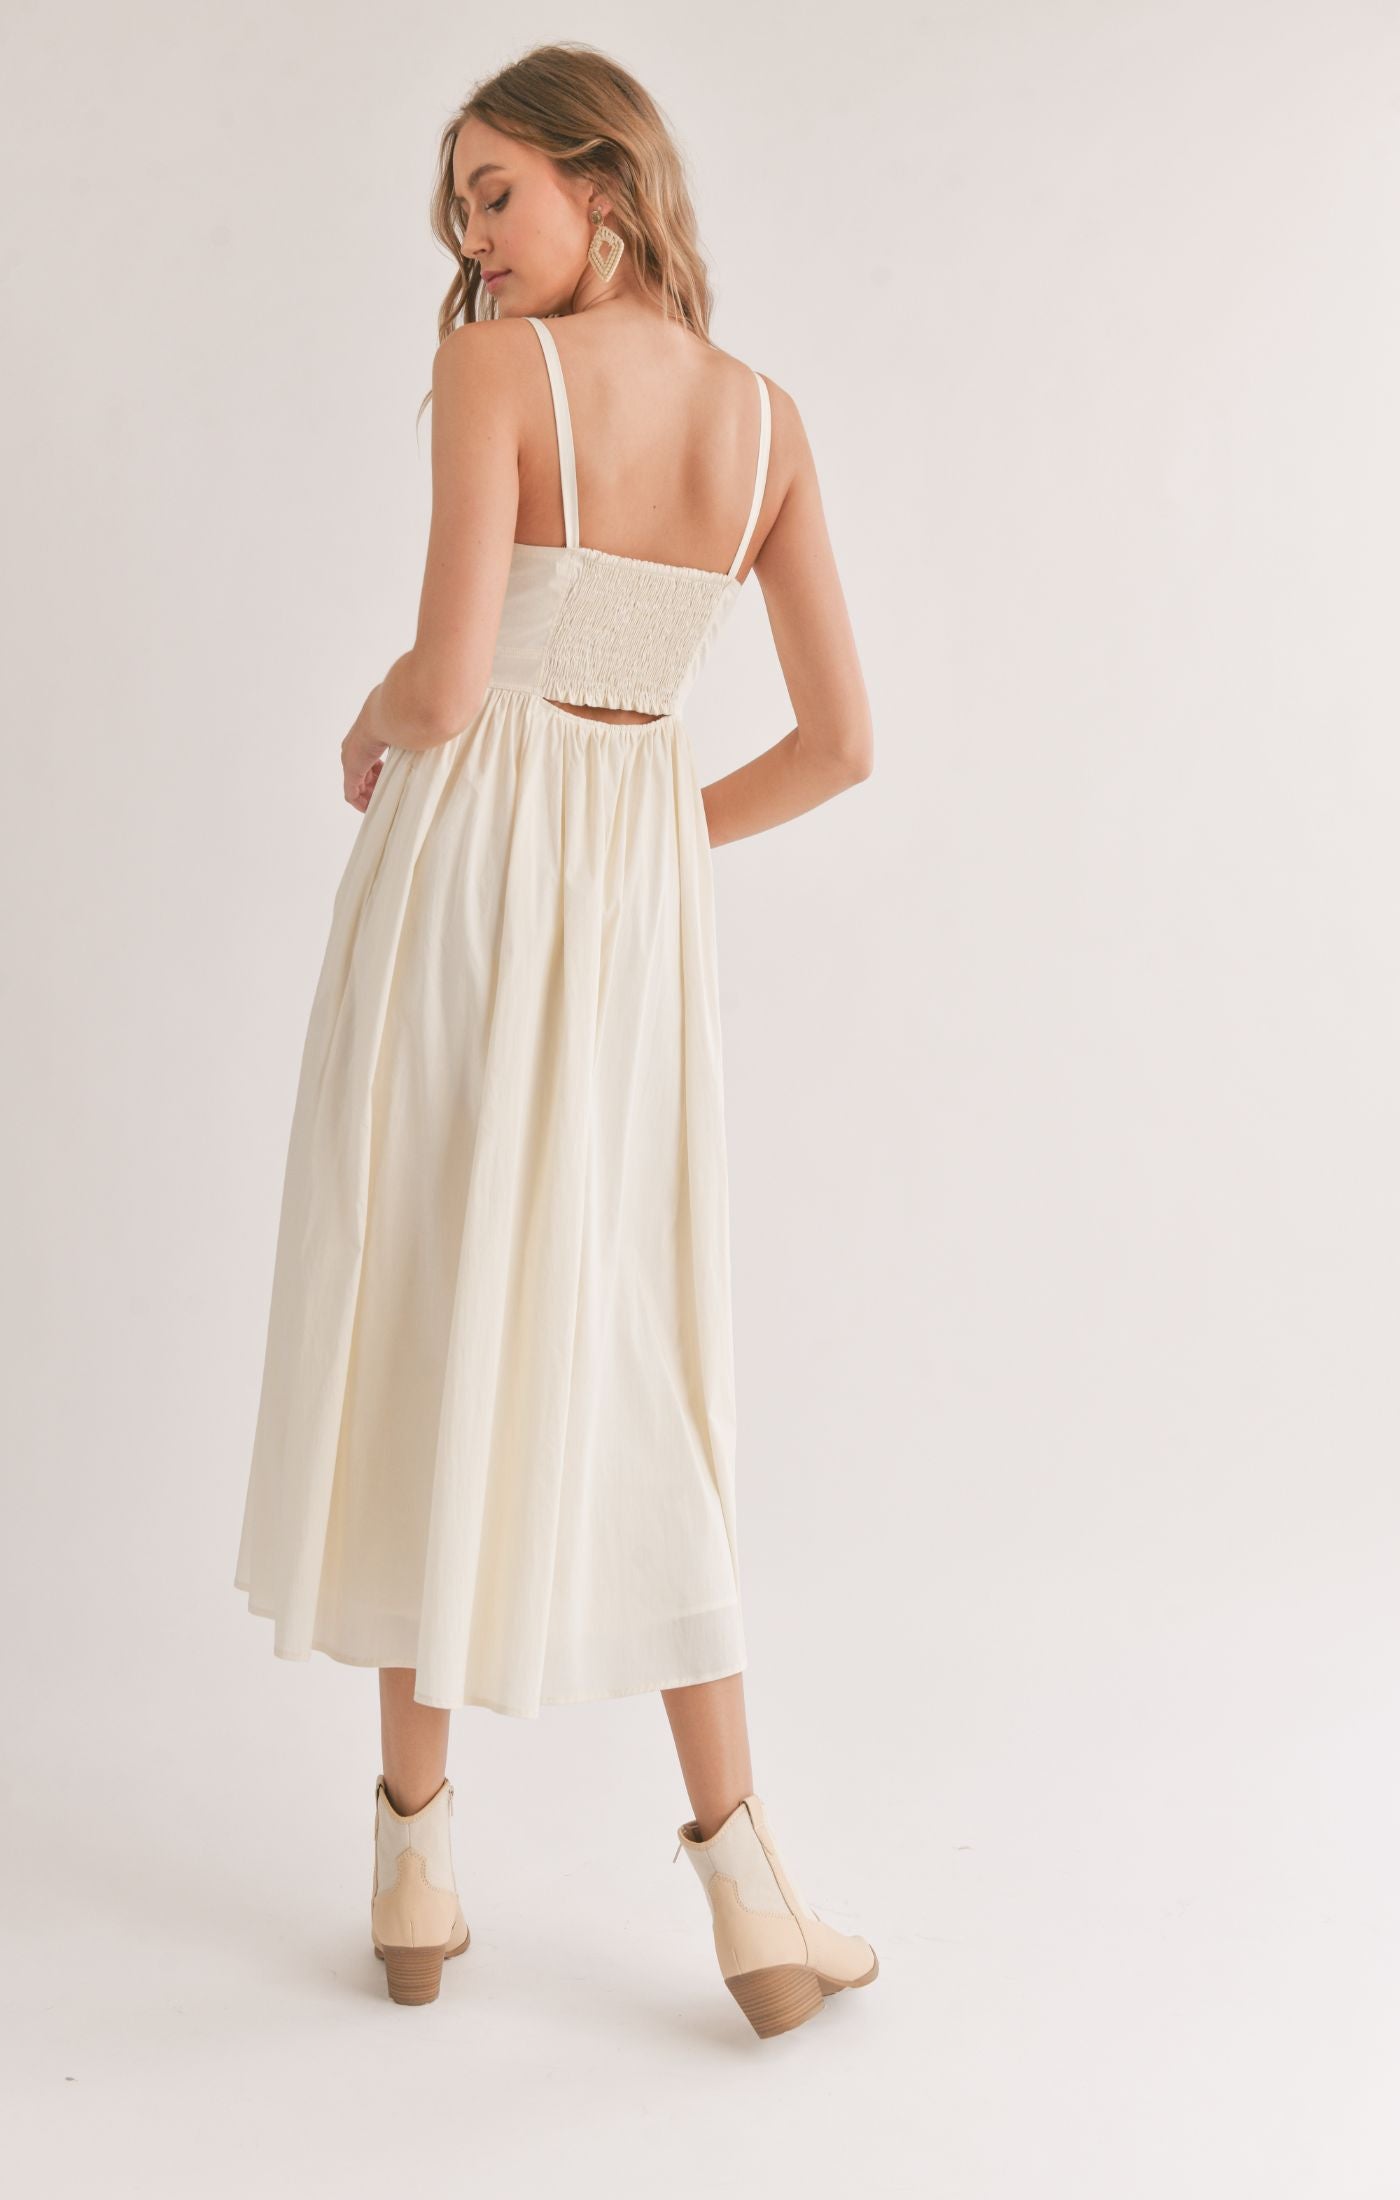 Shades on Front Cutout Midi Dress - shopatgrace.com